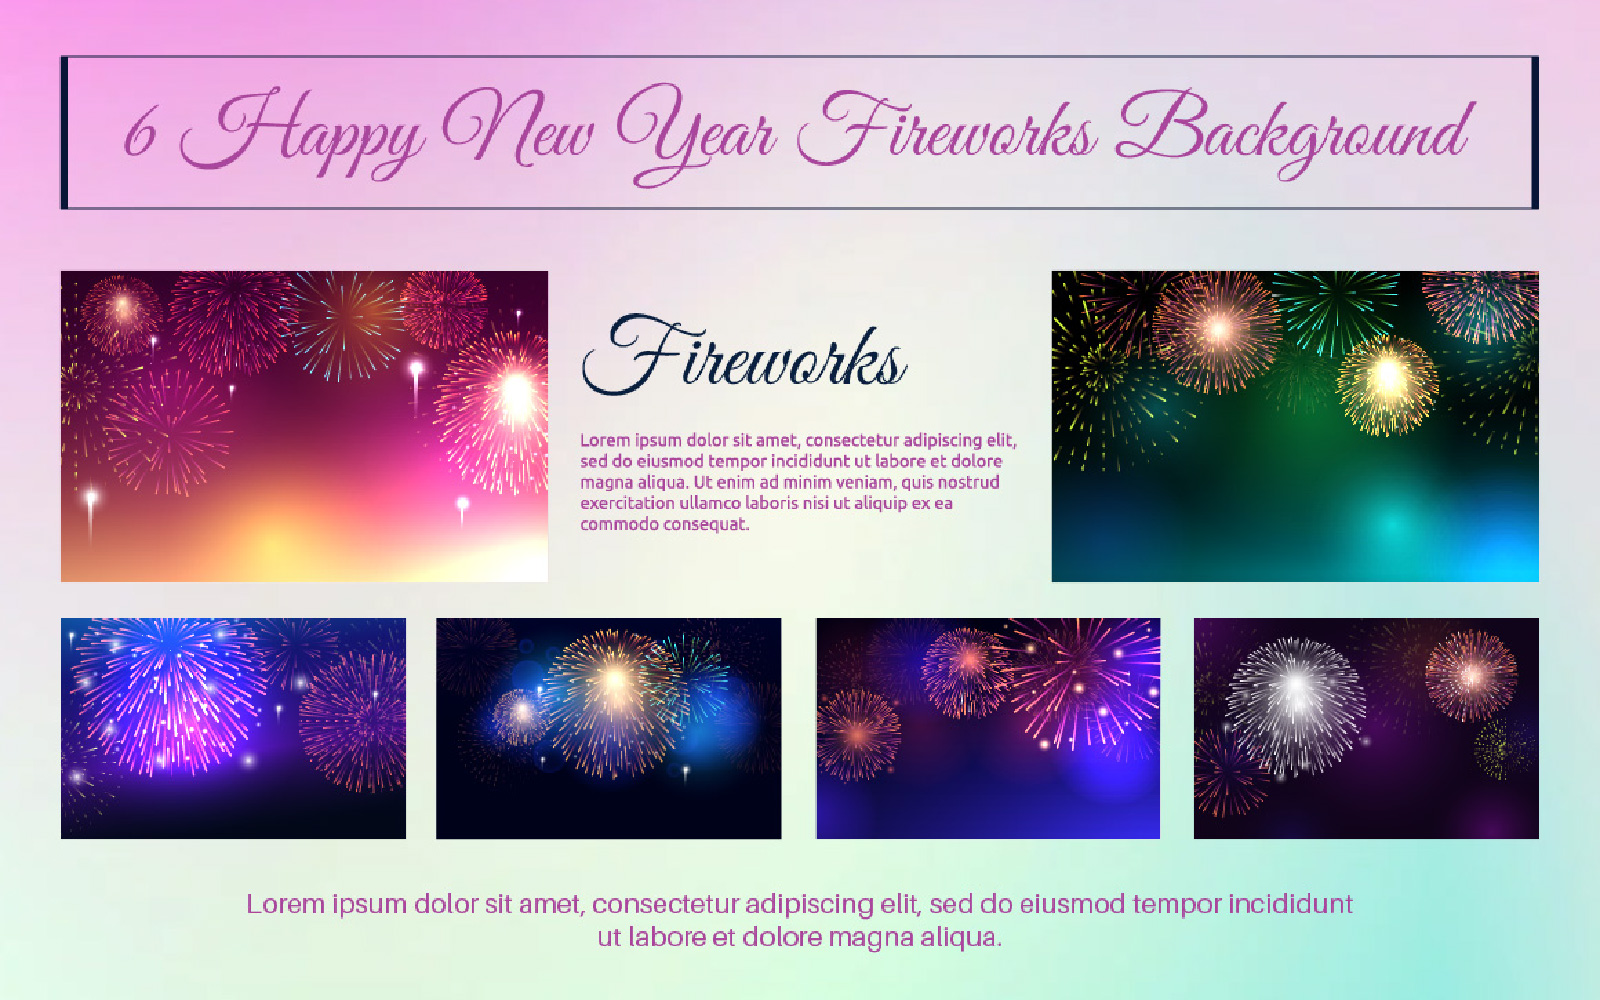 6 Happy New Year Fireworks Background